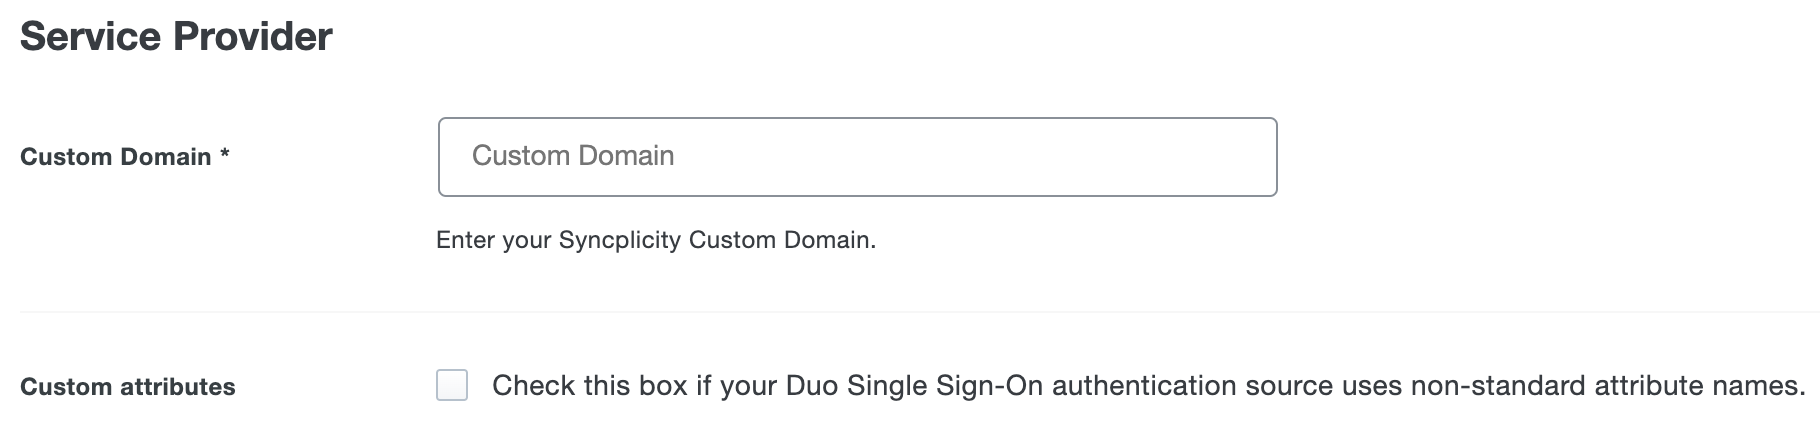 Duo Syncplicity Custom Attributes Checkbox